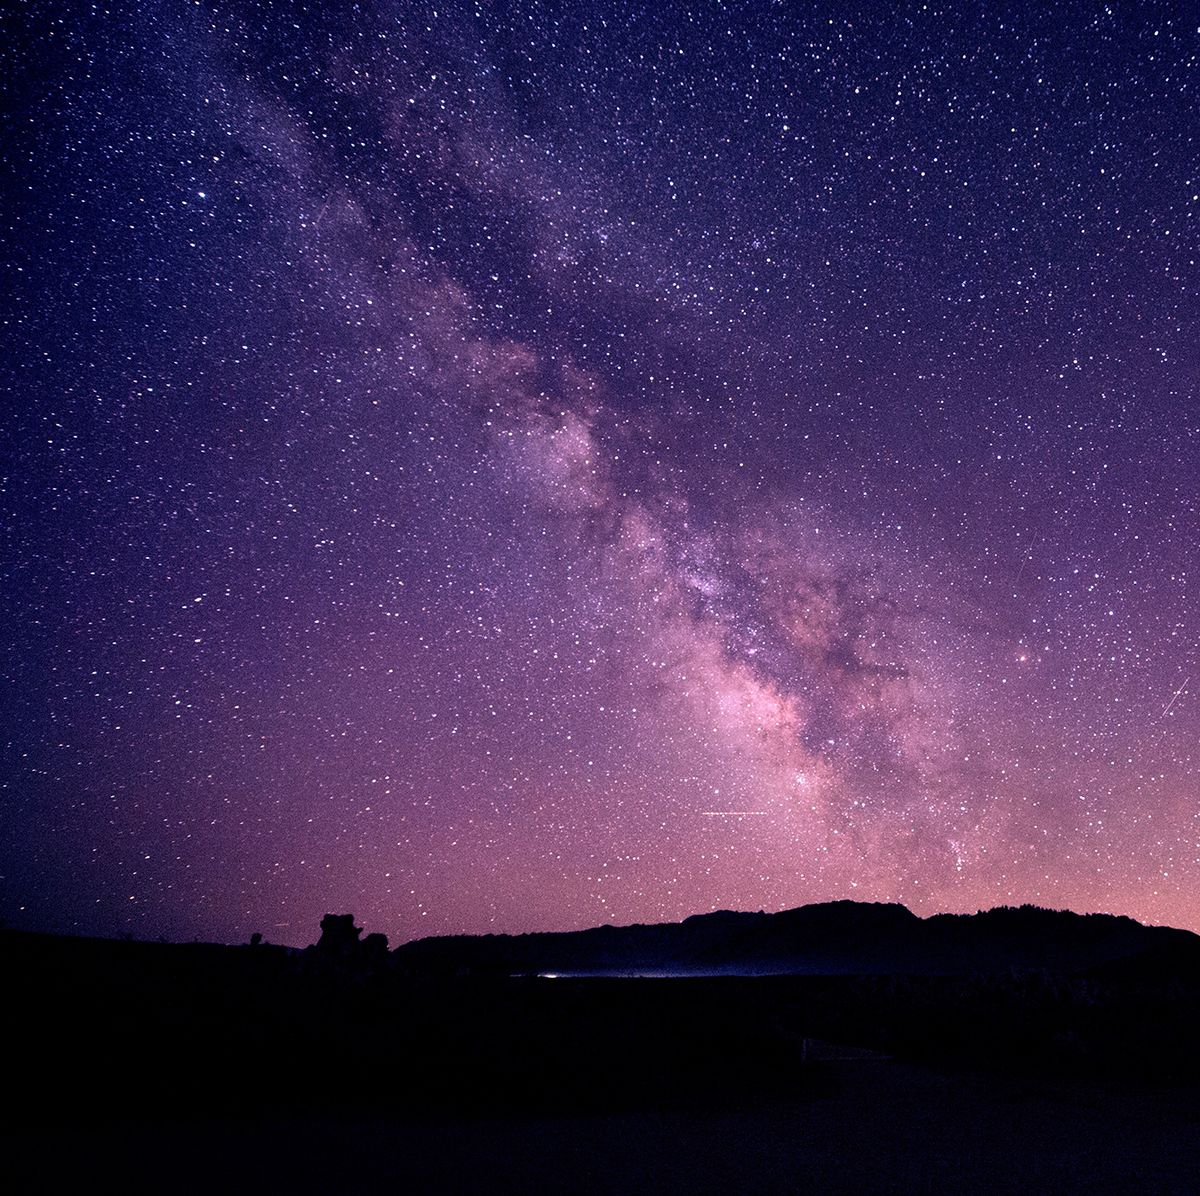 Starry sky at night, mono lake, california, usa